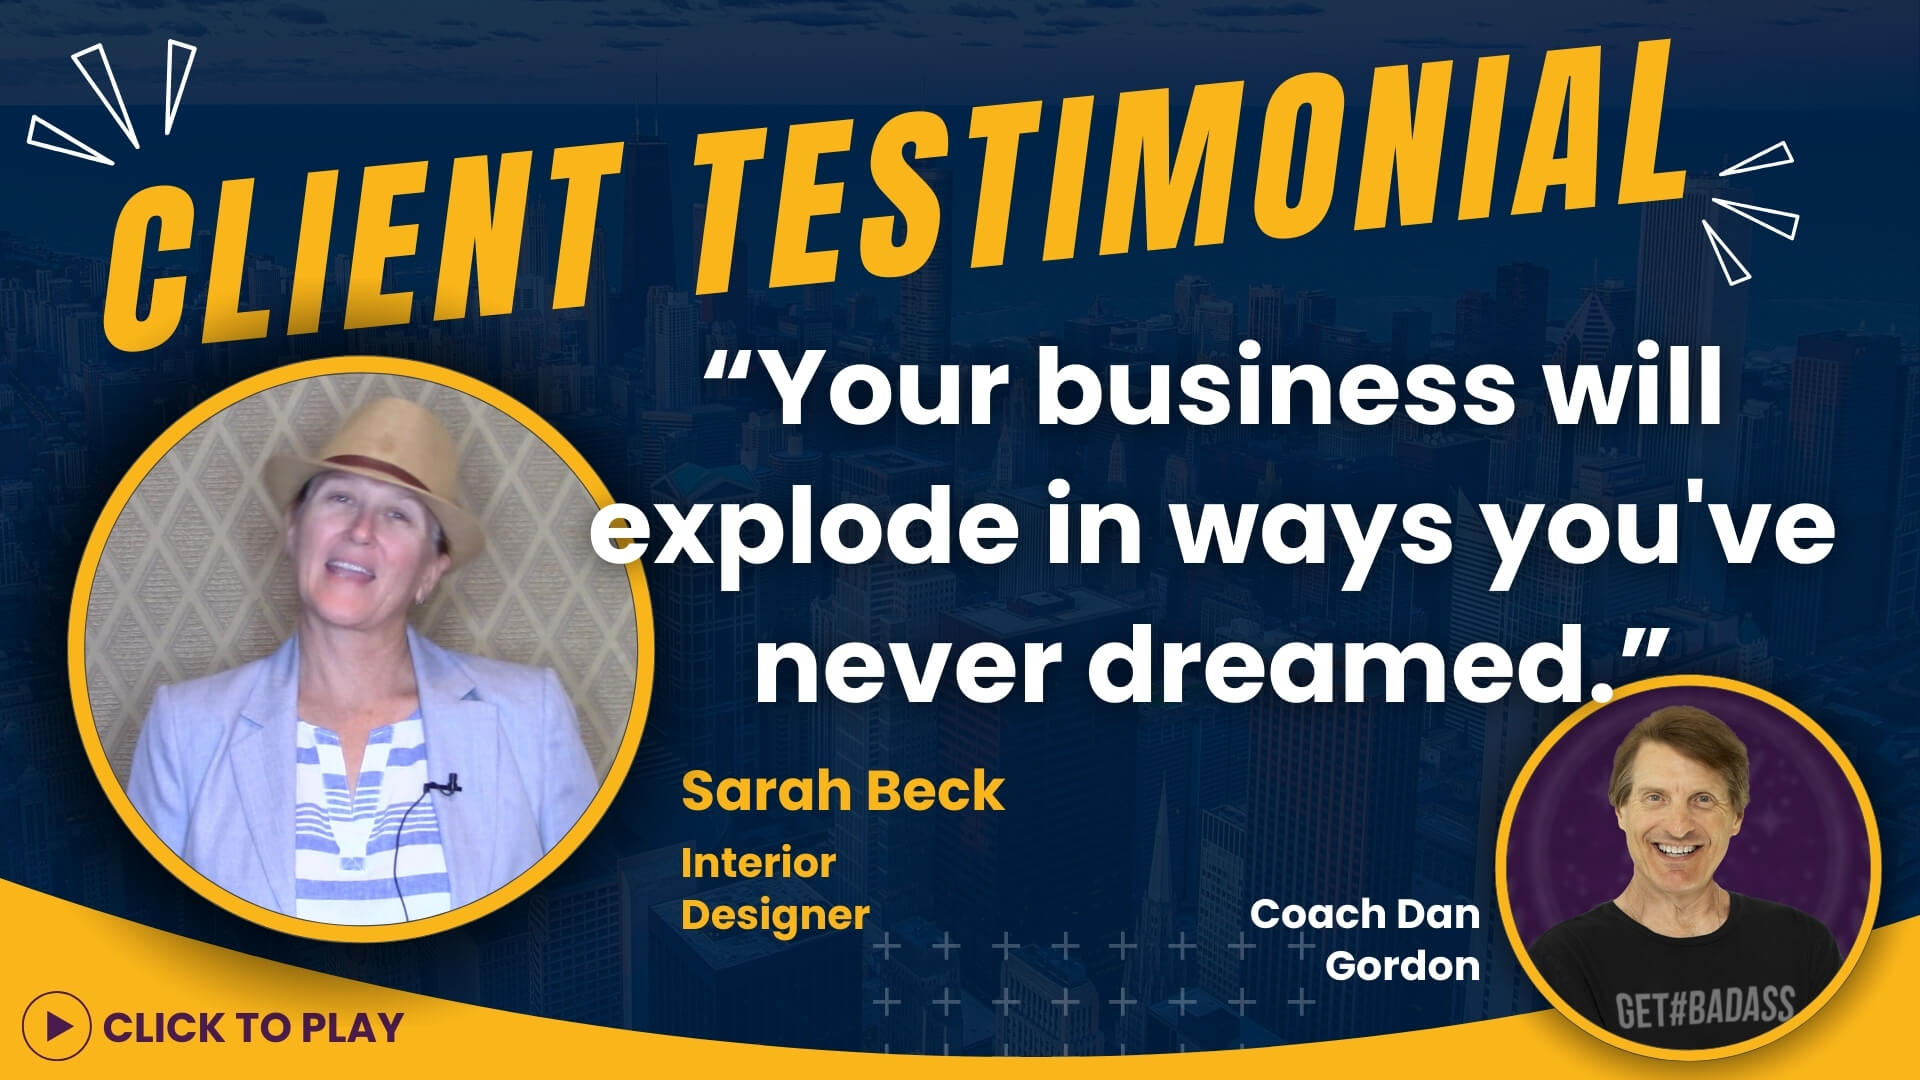 Interior Designer Sarah Beck in a testimonial video thumbnail, praising Coach Dan Gordon for explosive business growth, clickable to play.